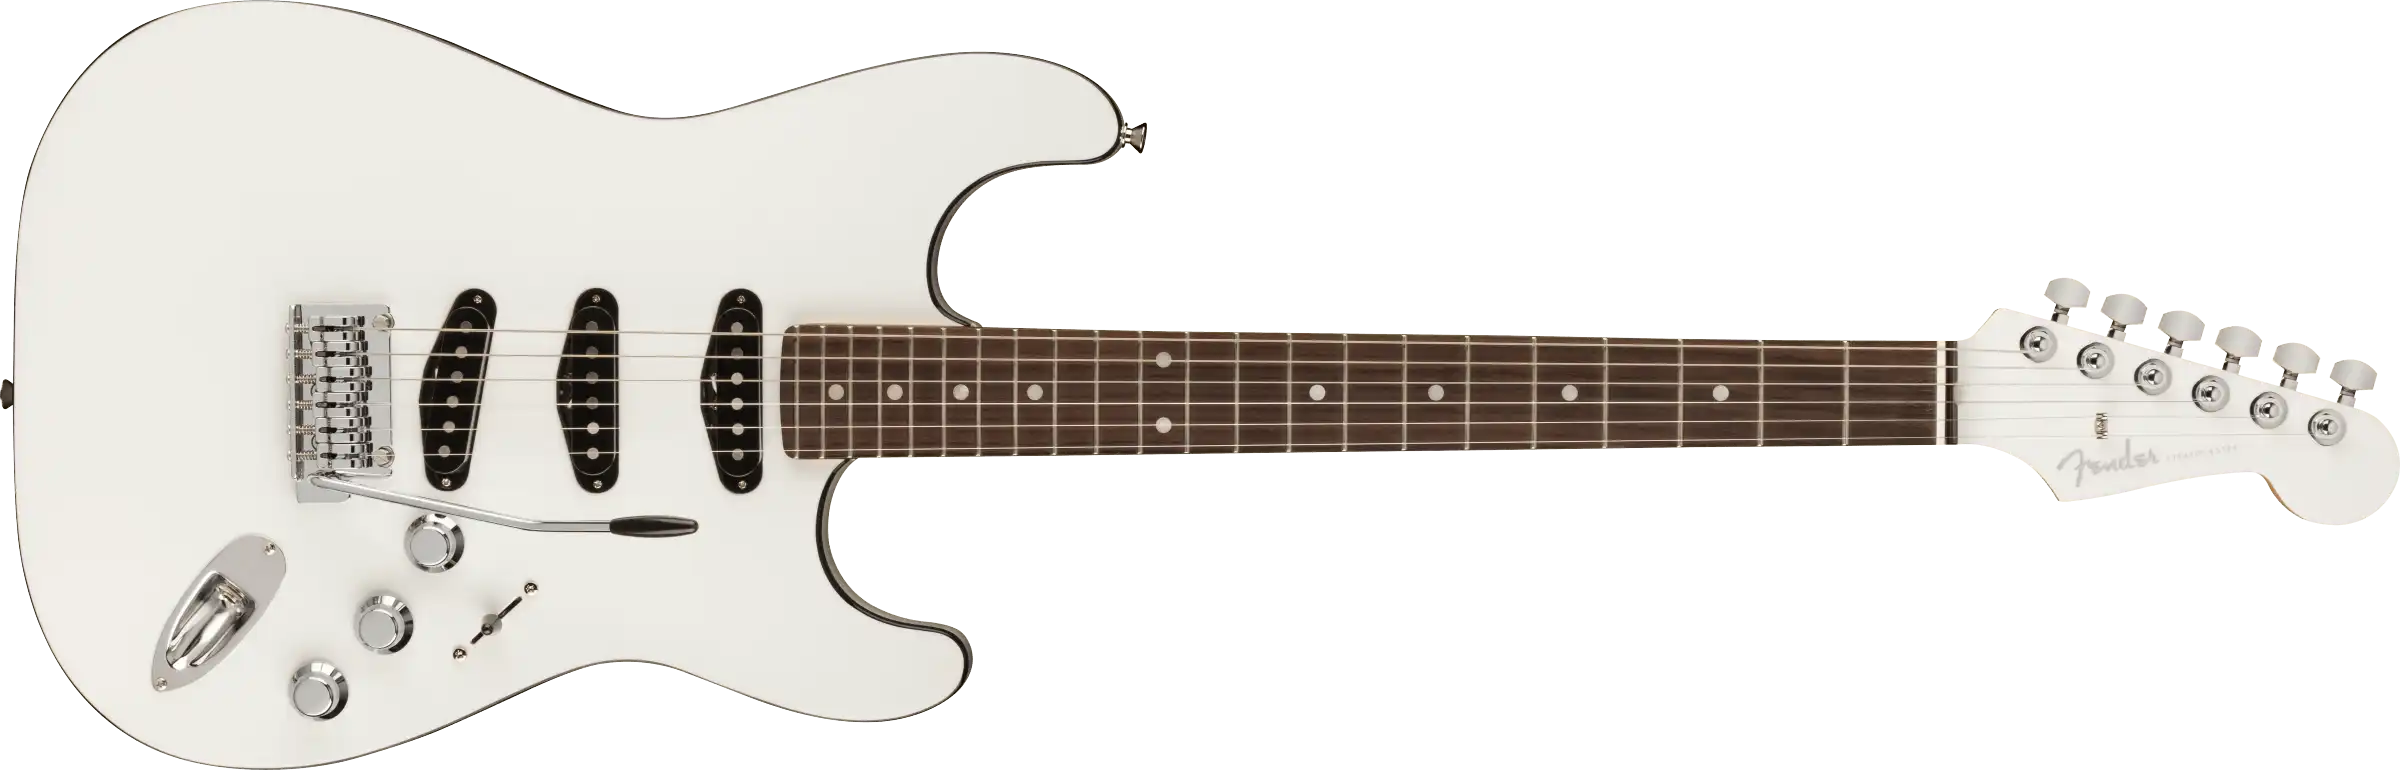 Fender Strat Aerodyne Special bright white/rw